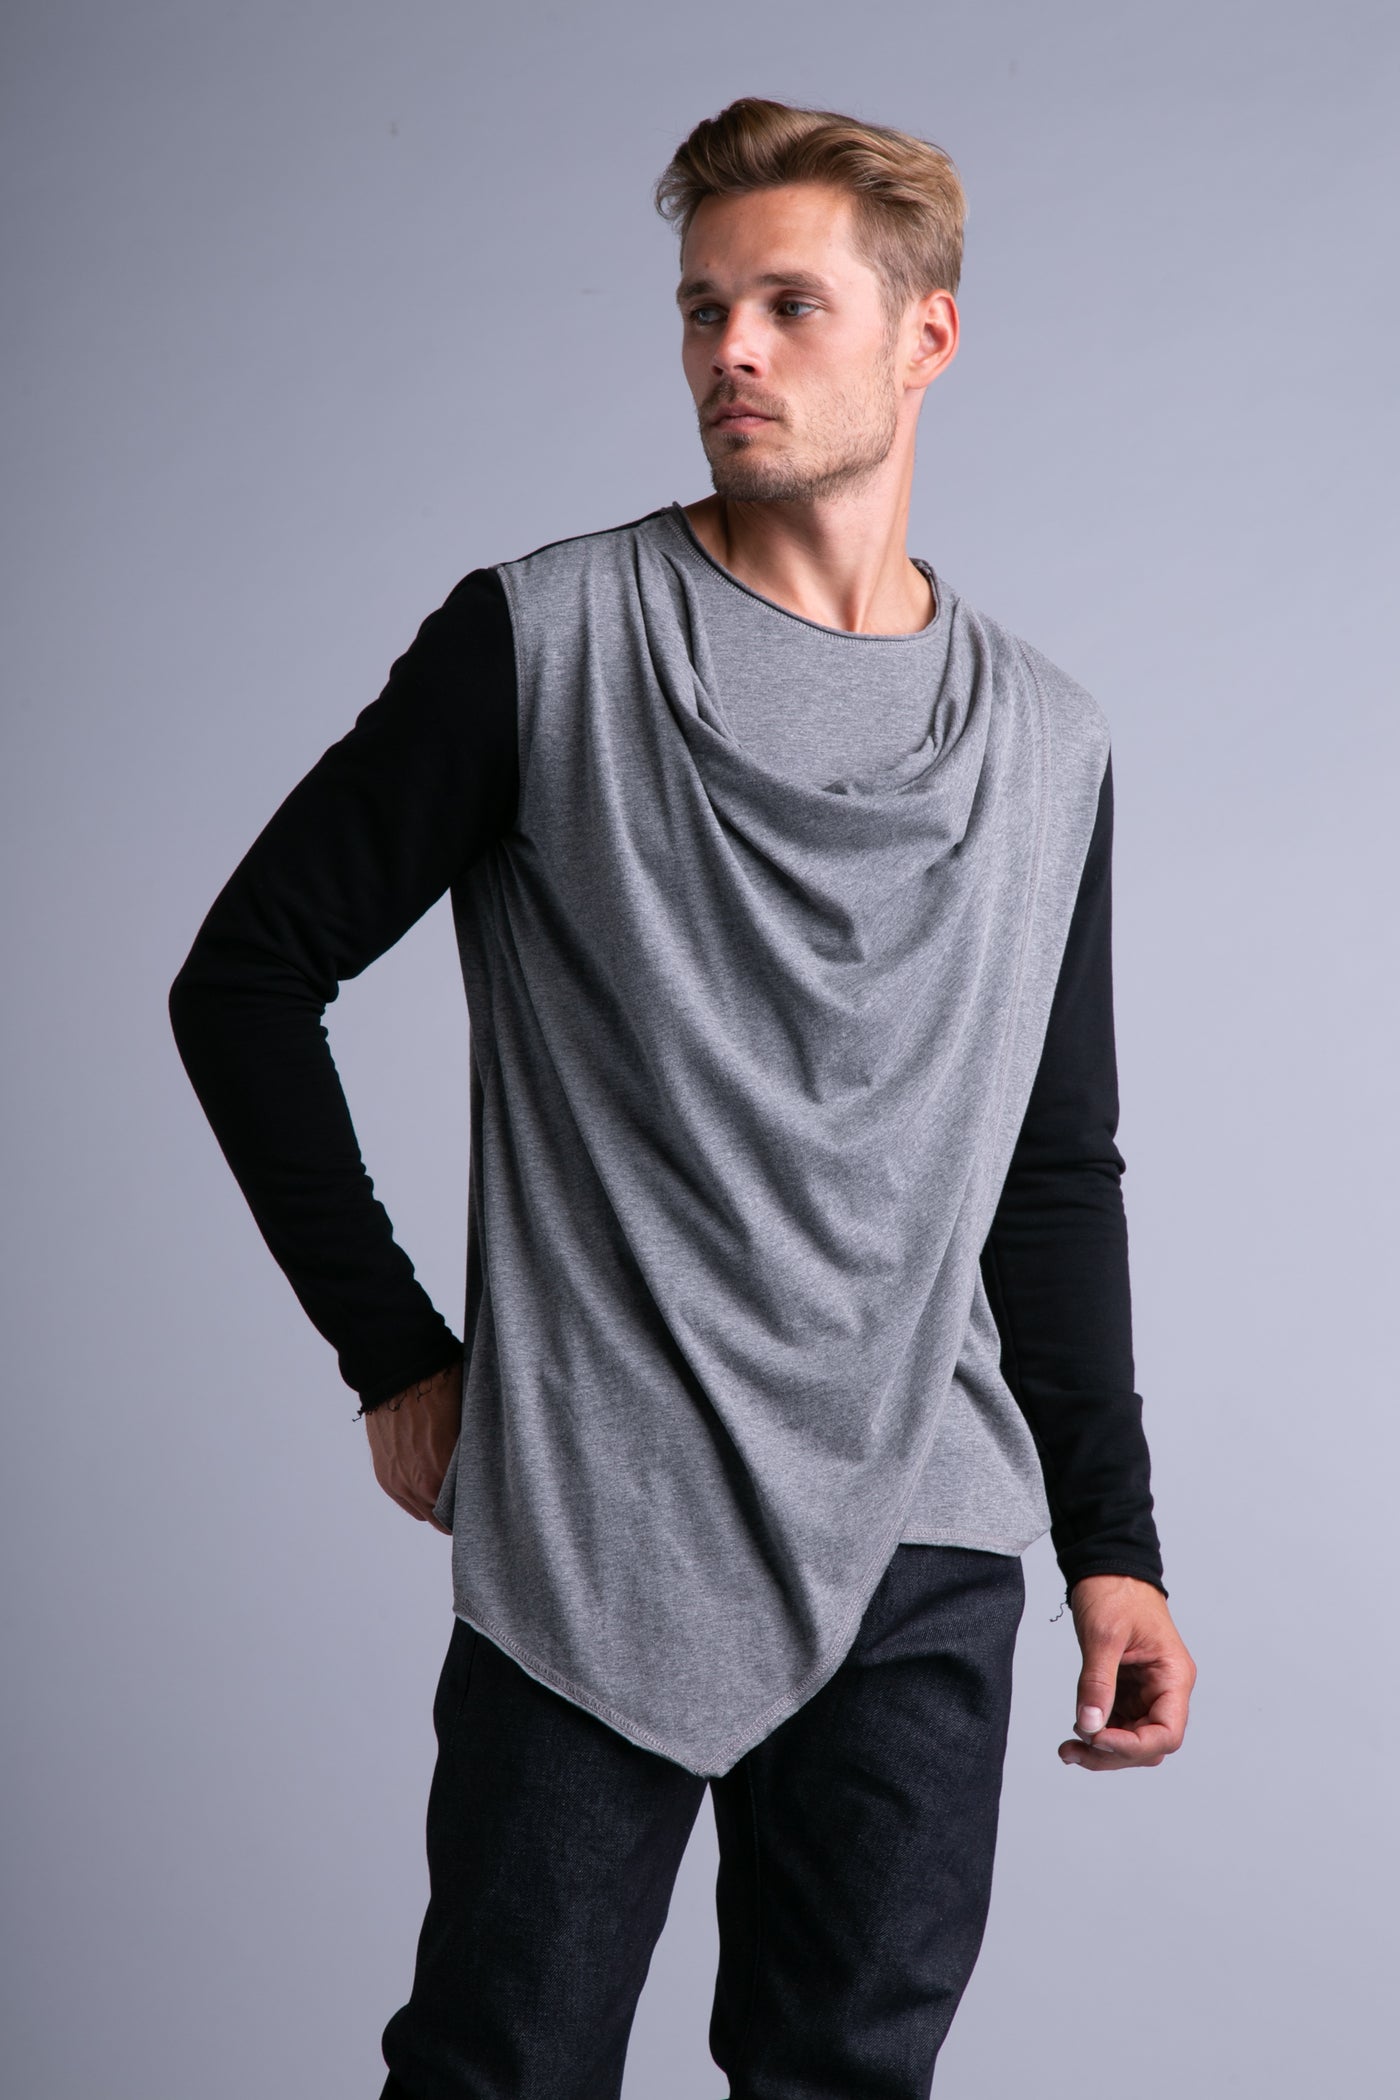 Draped shirt for men, long sleeves | Black, grey